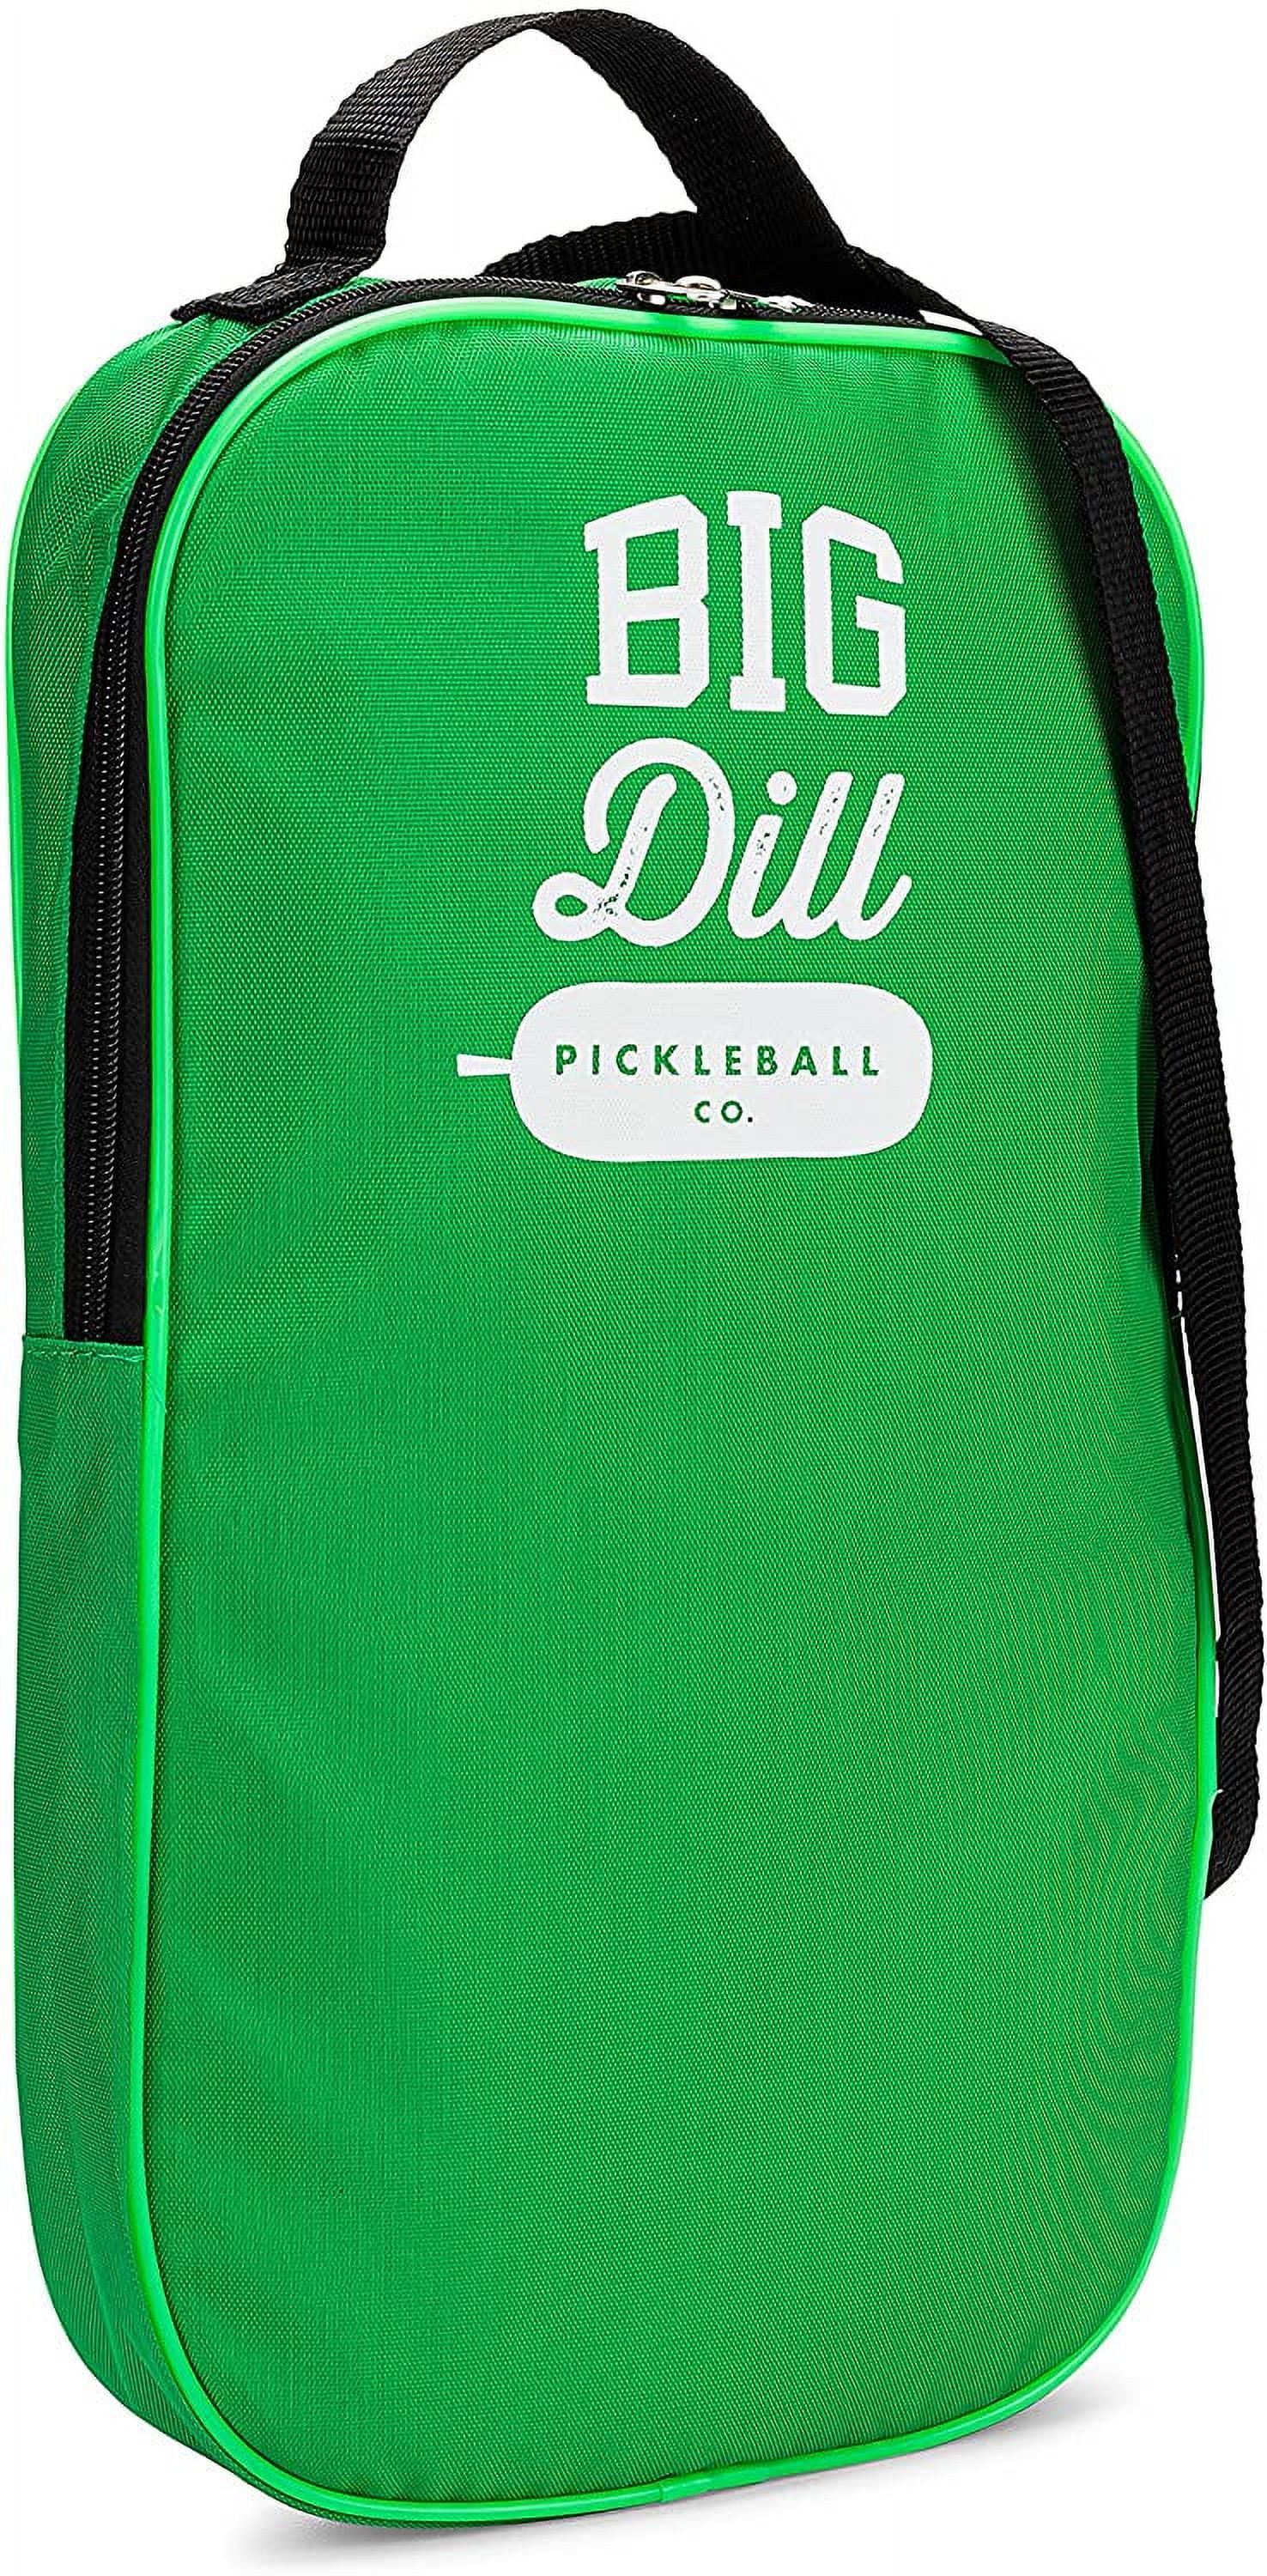 Big Dill Pickleball Co. Superstar Wooden Pickleball Paddle Set Bundle Pack of 4 Wood Pickleball Paddles, 4 Outdoor Pickleball Balls & Drawstring Bag